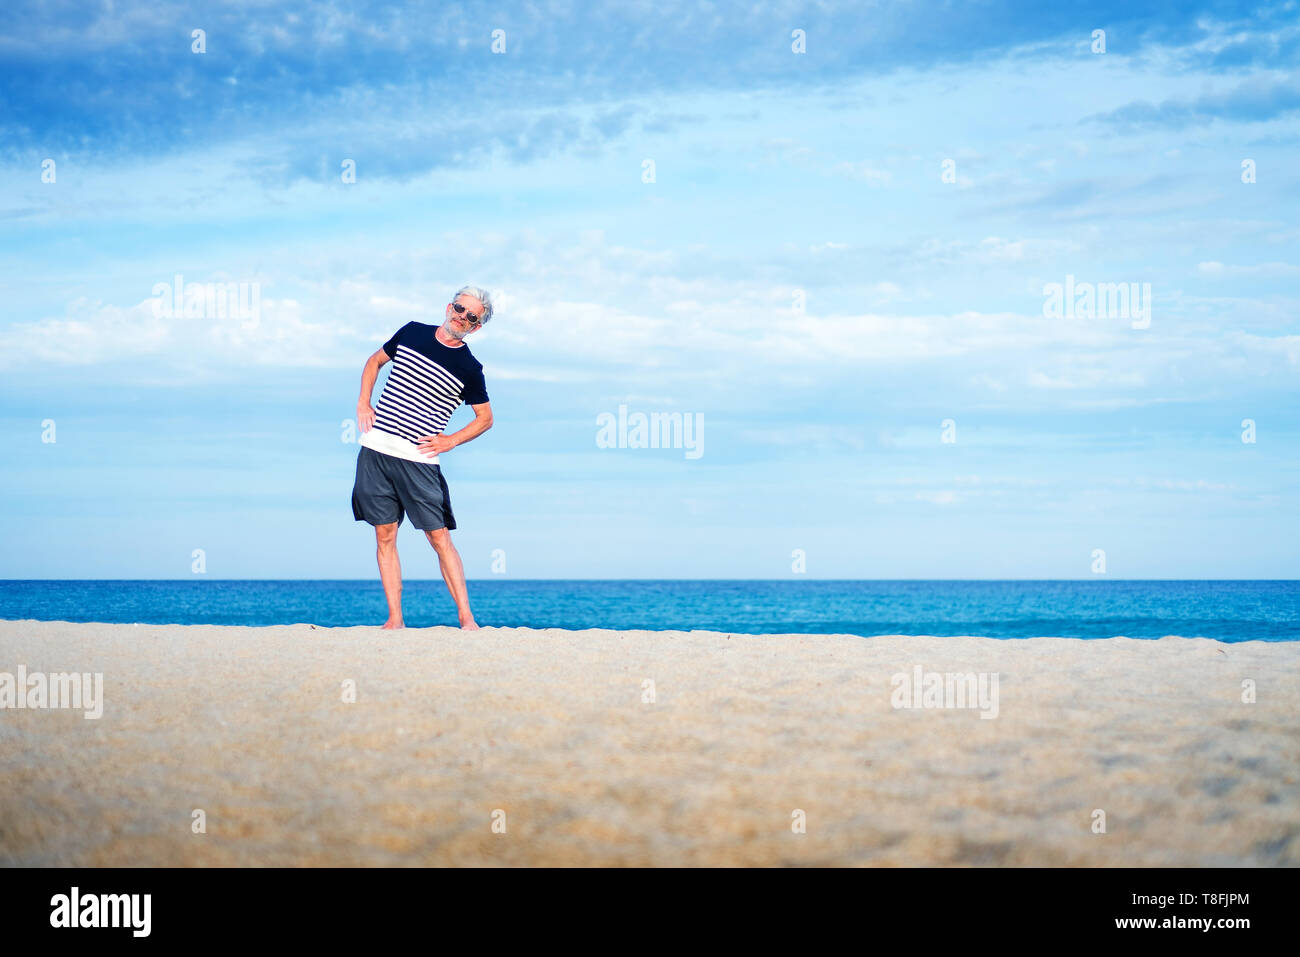 El hombre superior ejerce sobre la playa, el estilo de vida saludable Foto de stock